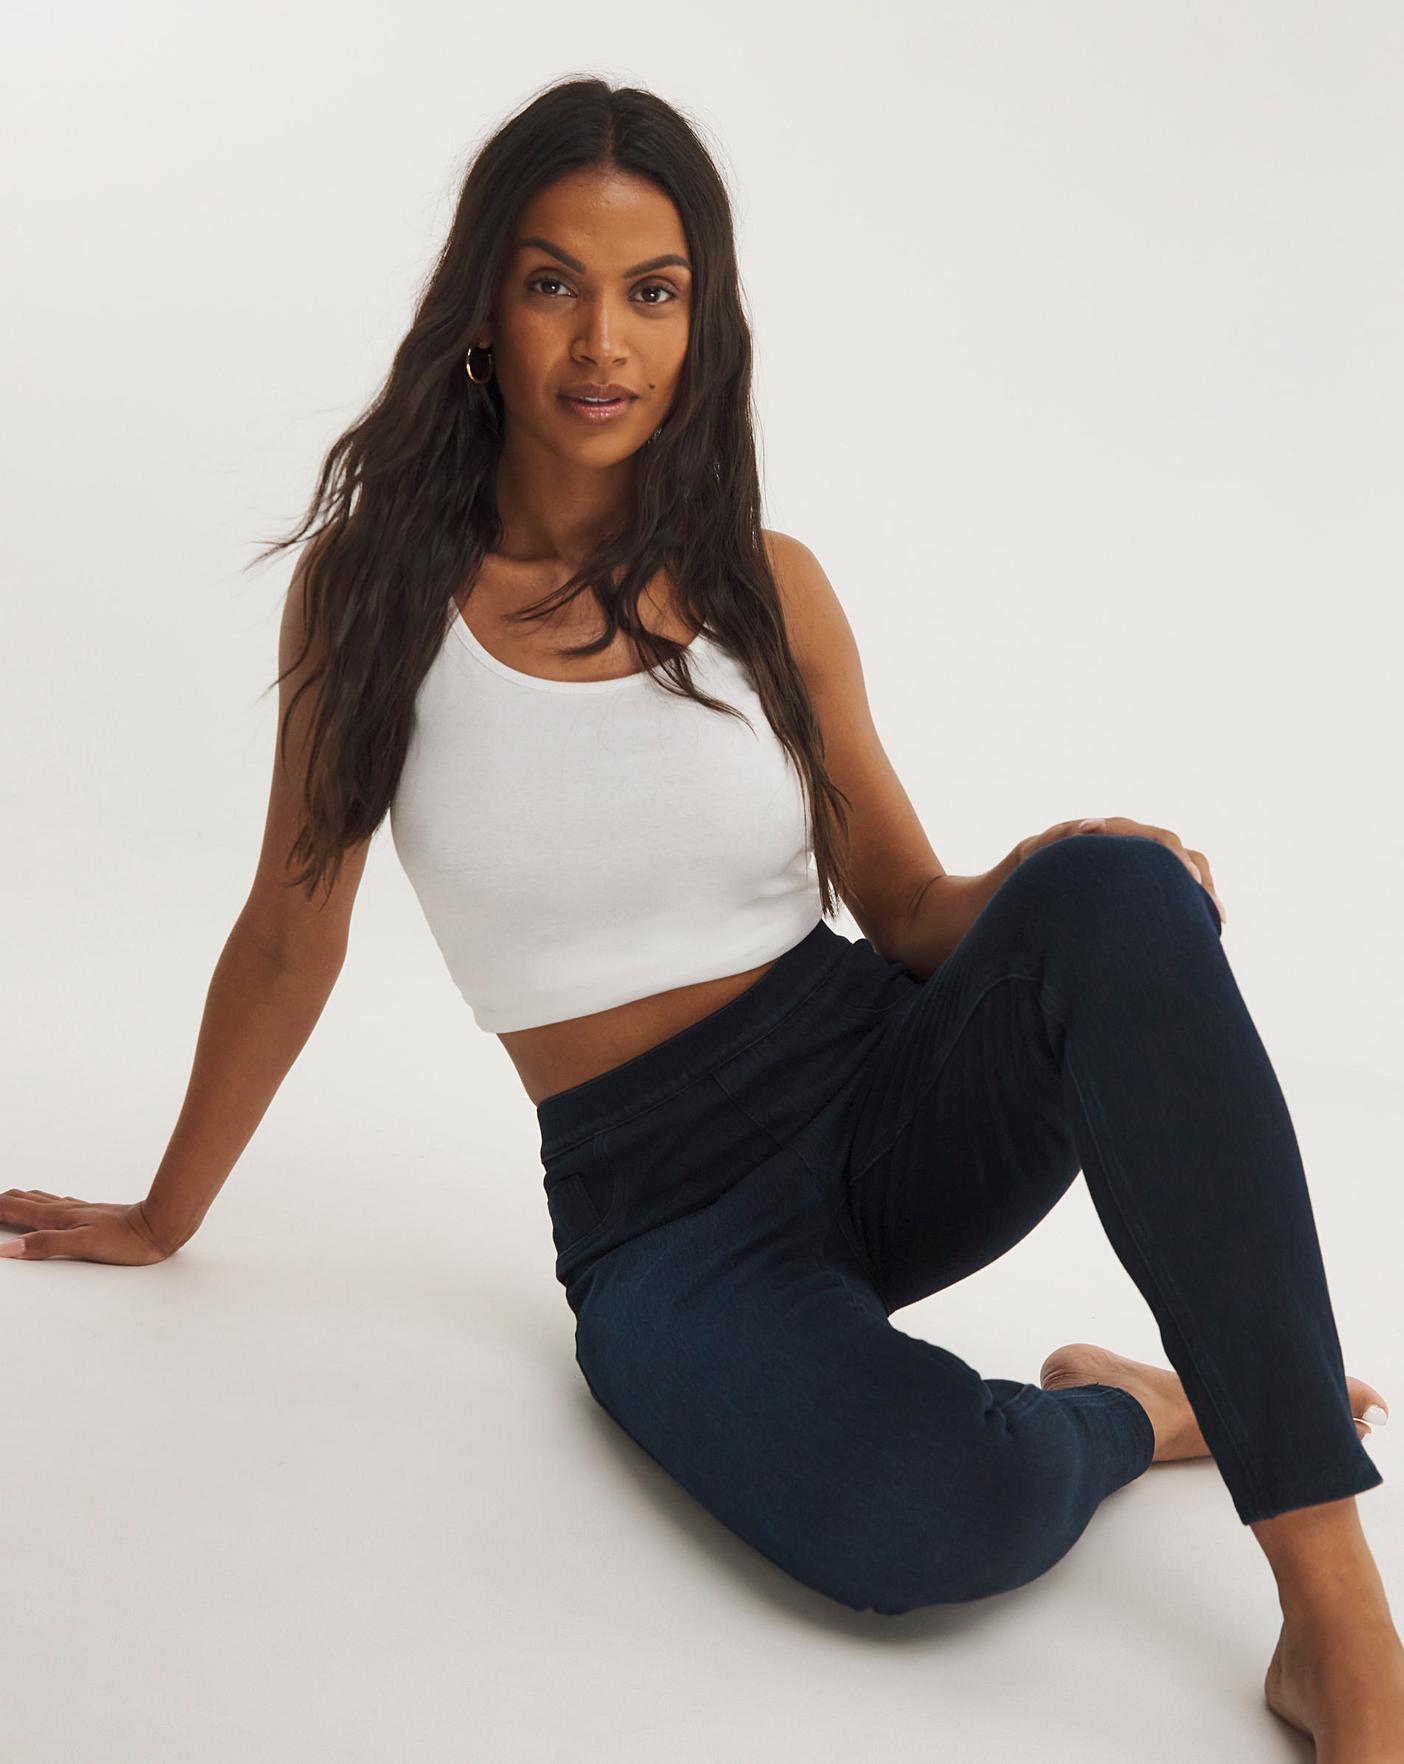 Spanx Ankle Length Skinny Jeans | Dillard's